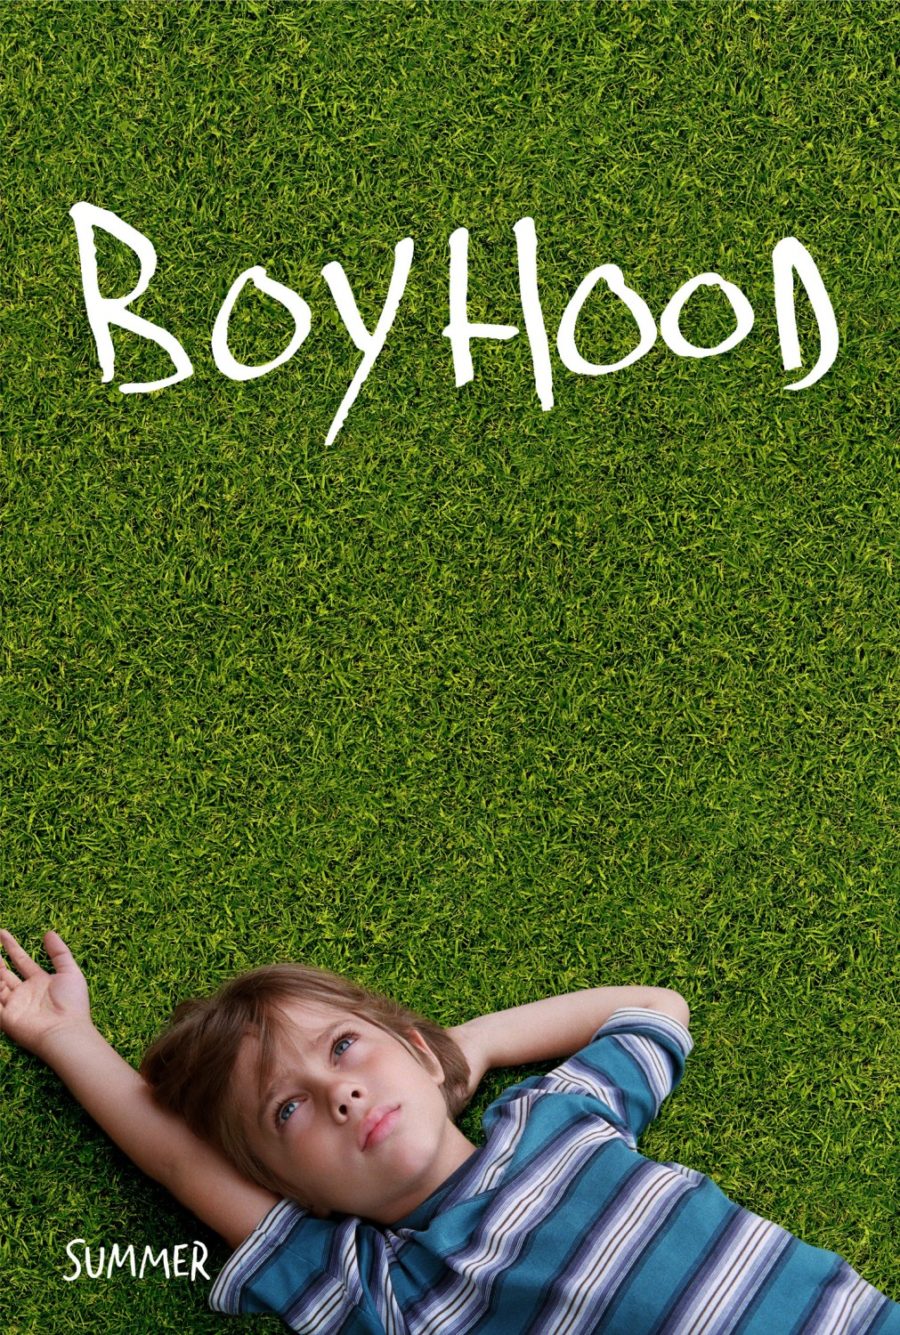 Boyhood, le superprojet méga-nostalgique de Richard Linklater